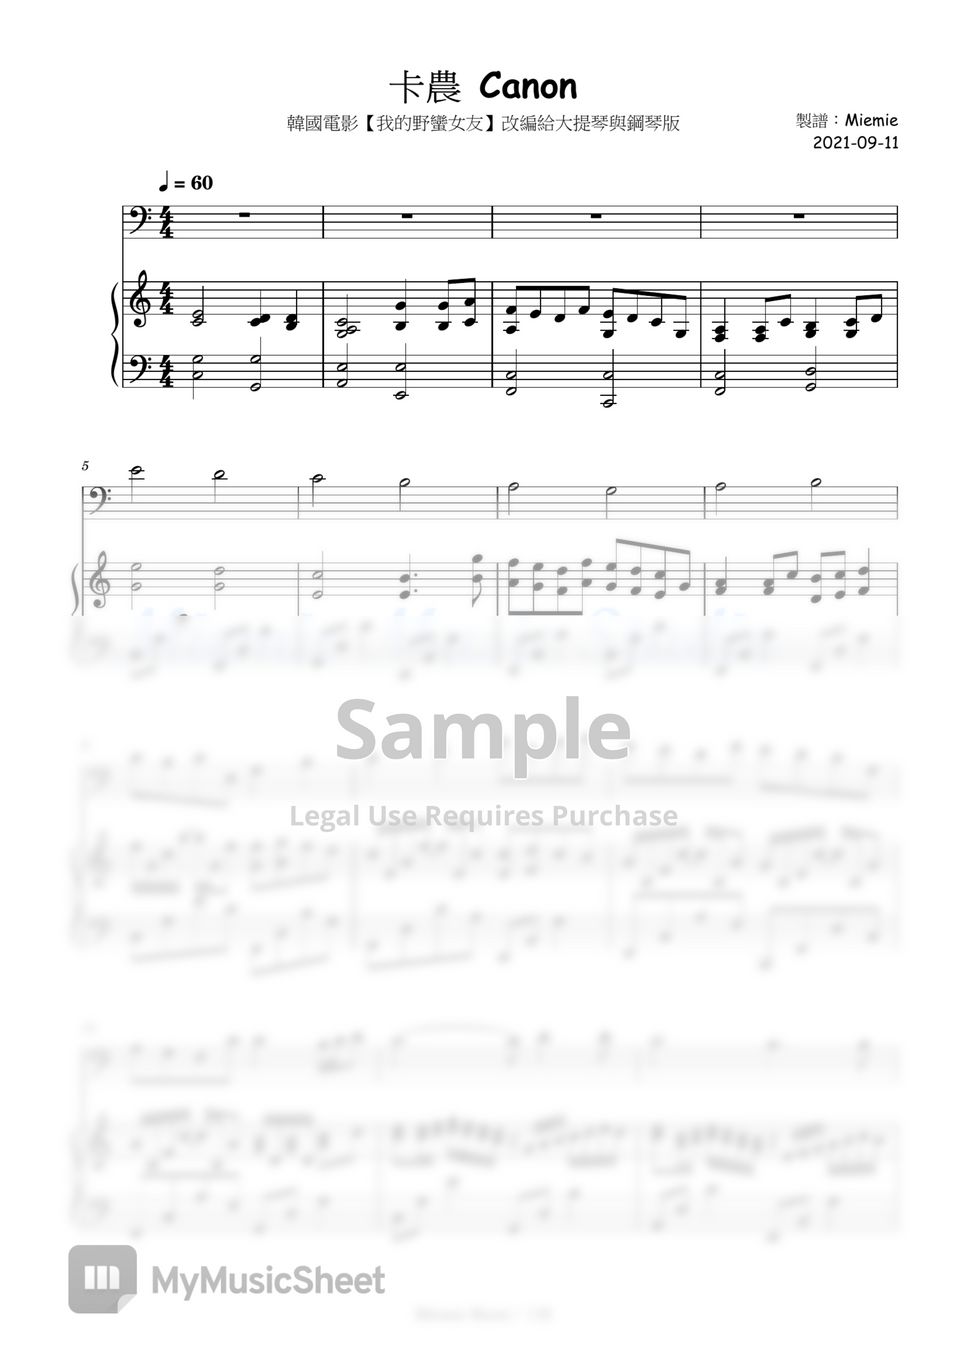 Pachelbel - 卡農 Canon (我的野蠻女友改編版) Cello+Piano Sheets 大提琴&鋼琴伴奏譜 (合奏) by Miemie Music Studio